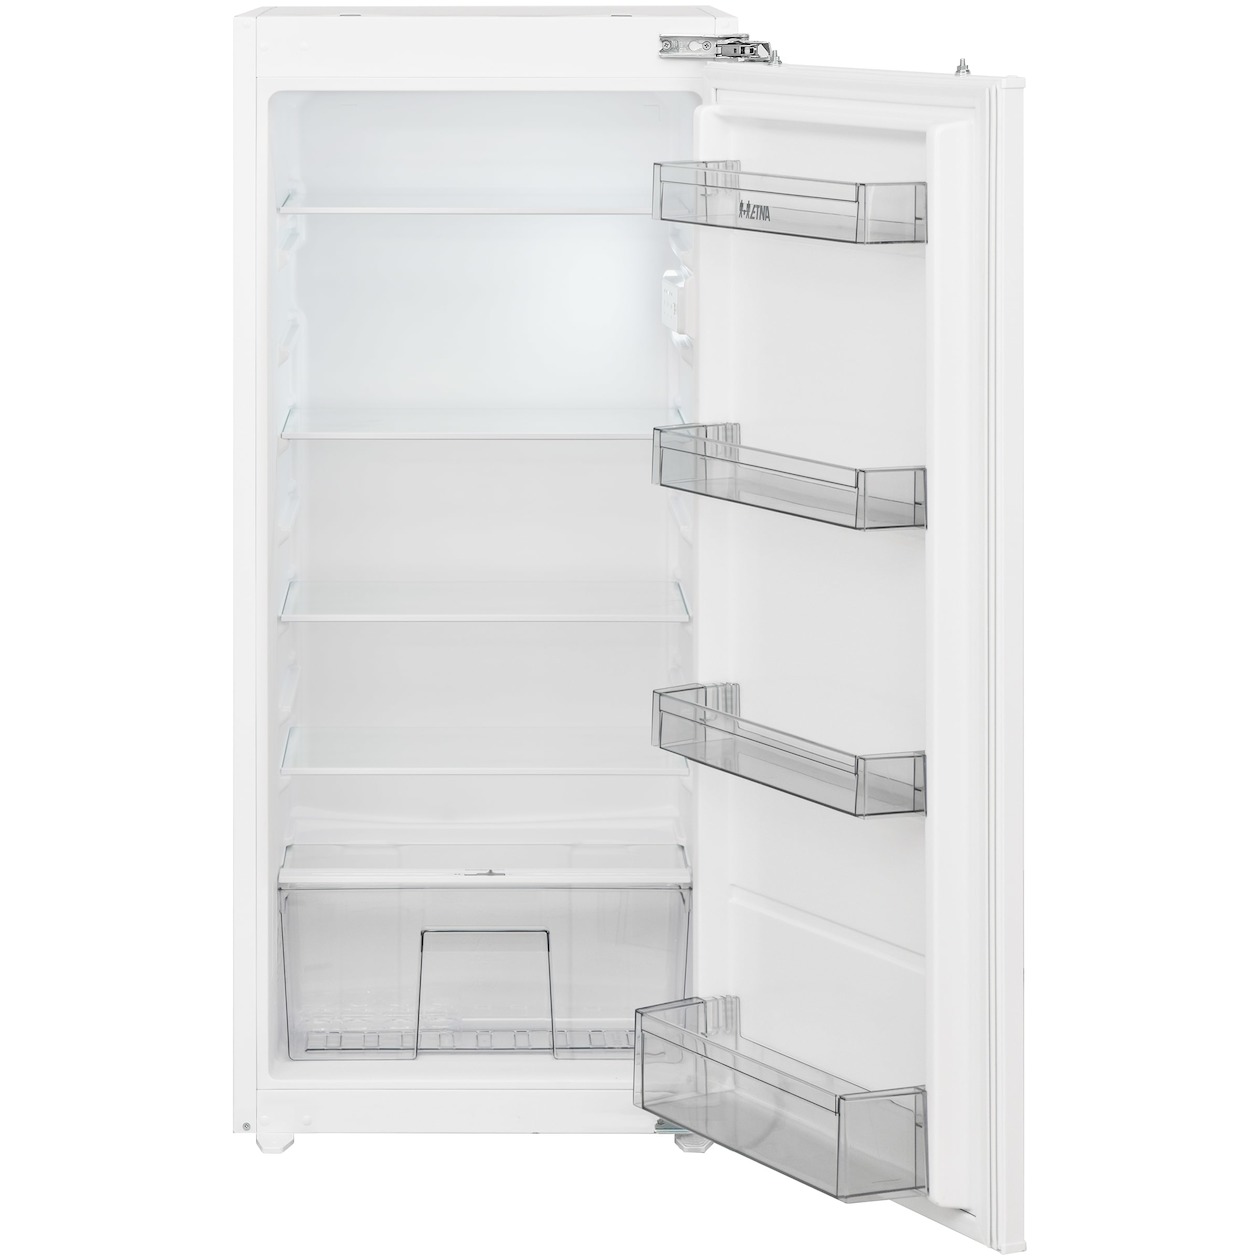 Etna KKD7122 Inbouw koelkast zonder vriesvak